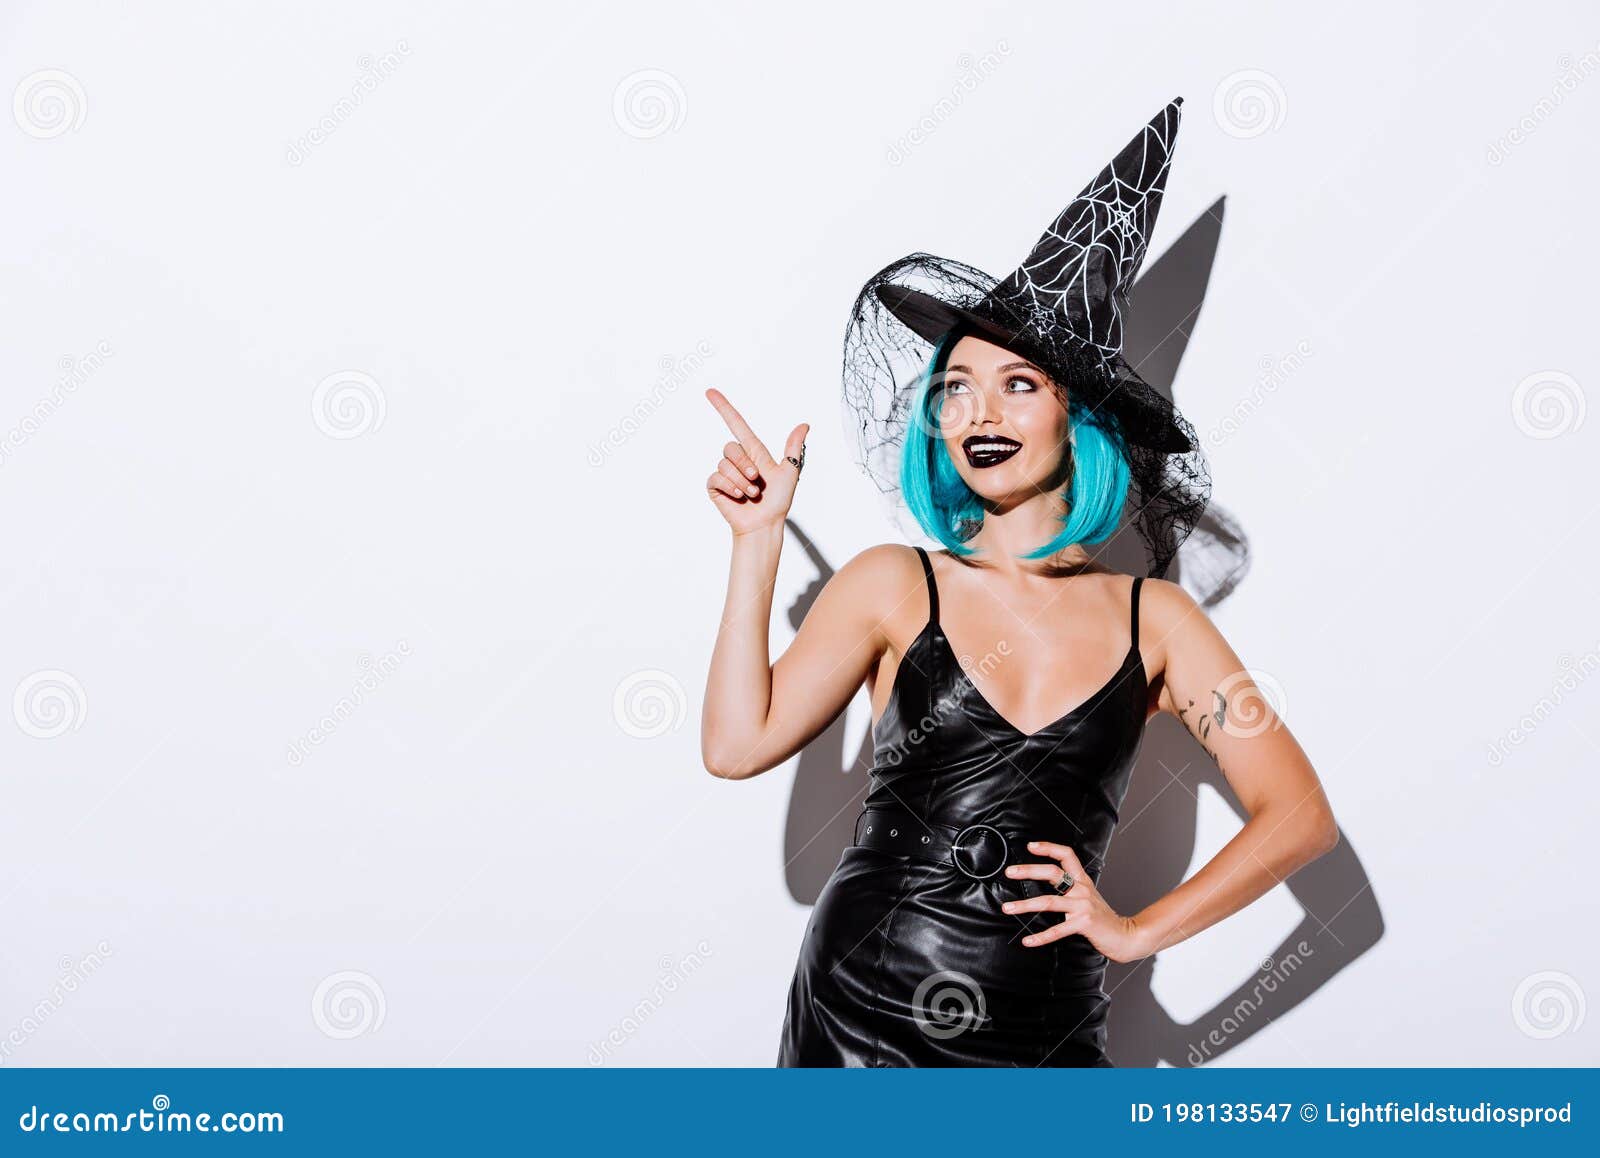 Blue Hair Halloween Costume Wigs - wide 8